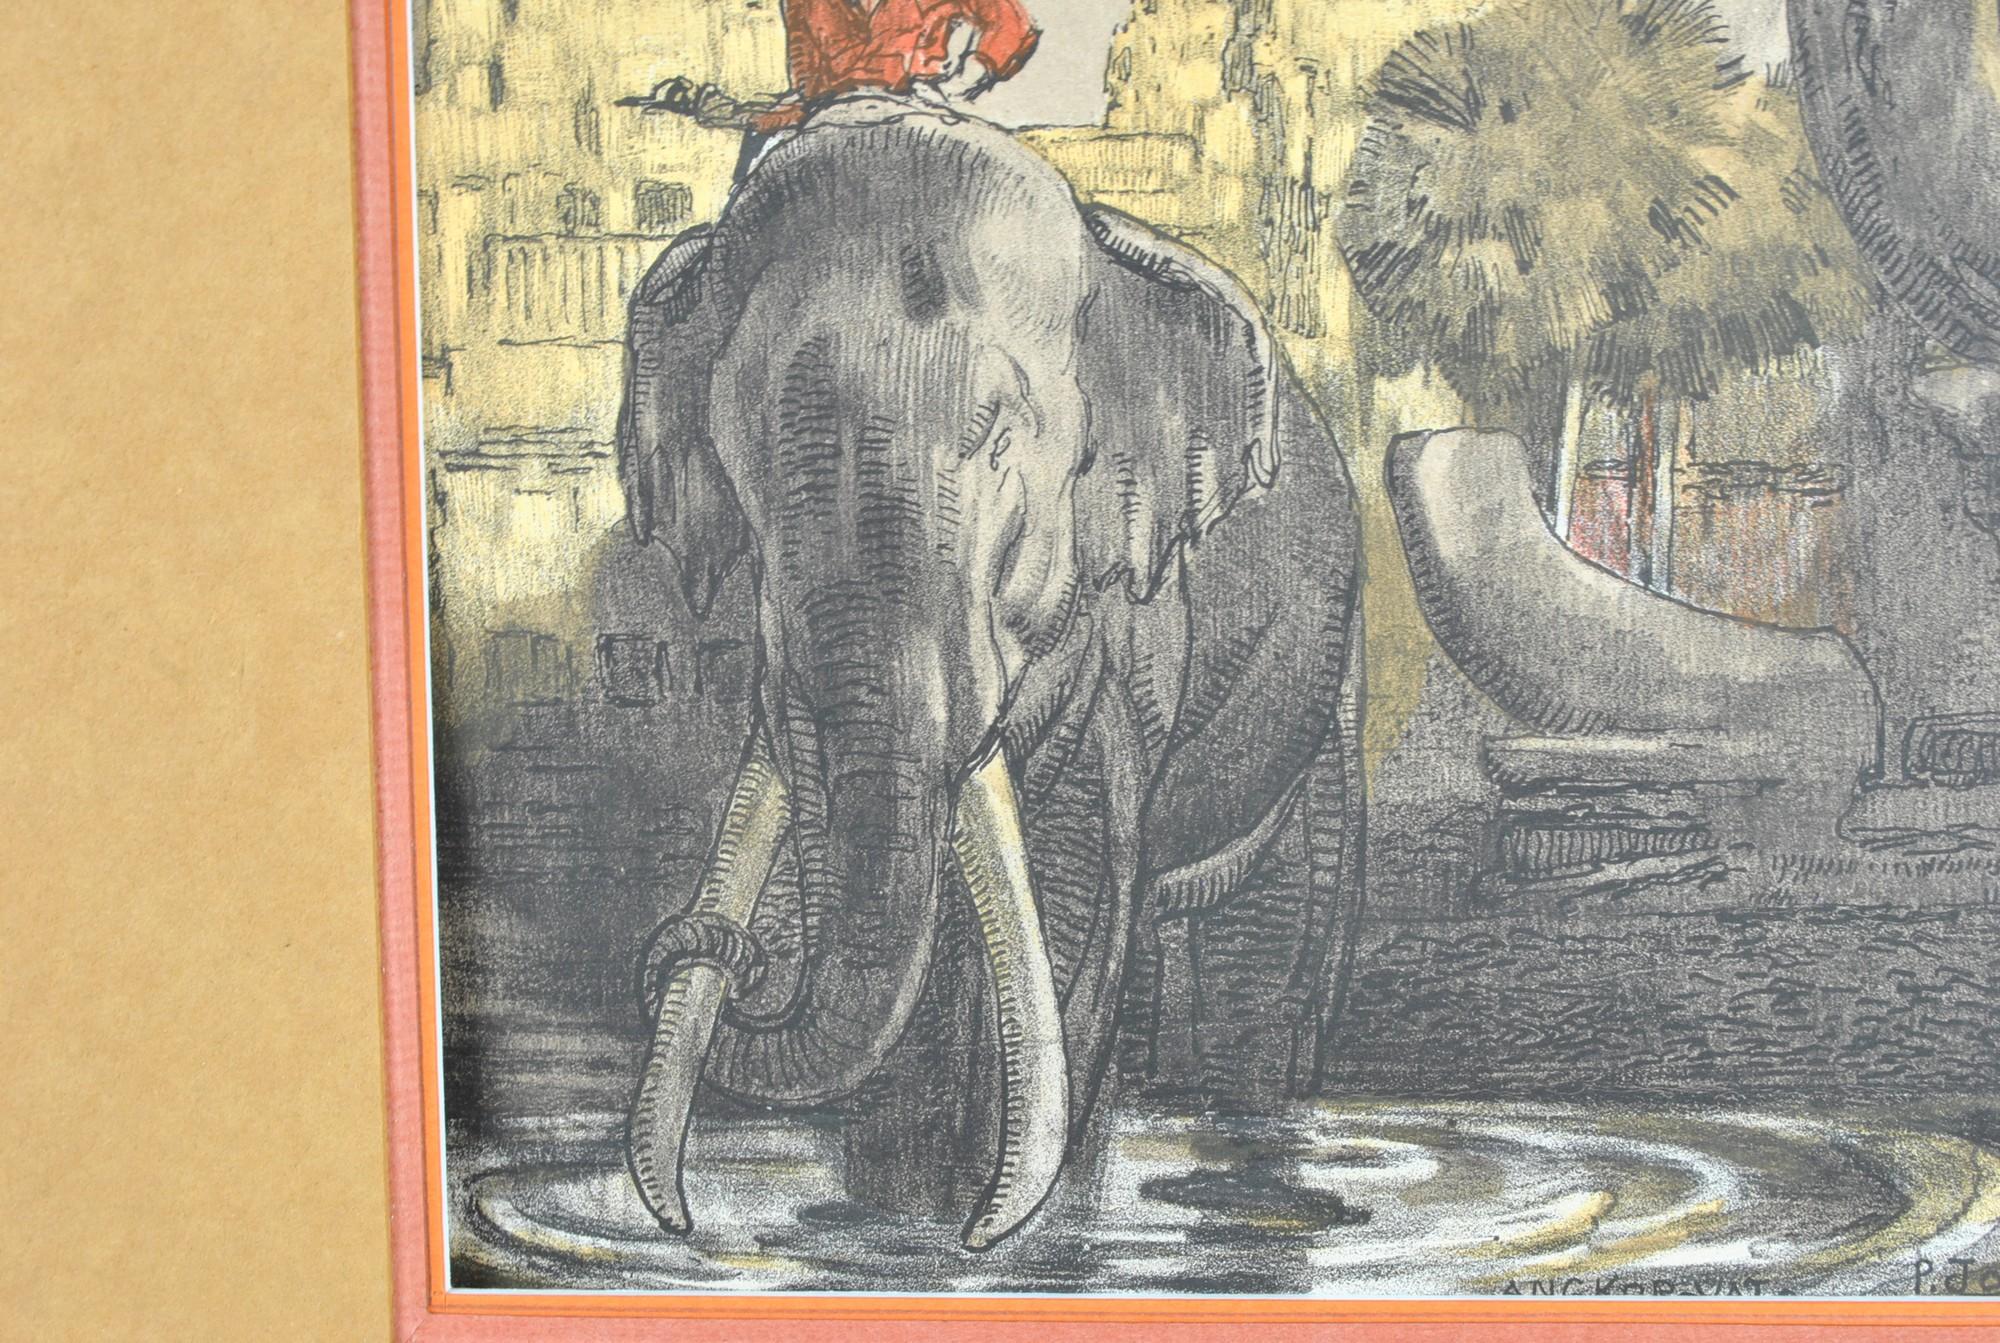 P Jouve, Angkor Wat, gerahmte Lithographie, XX. Jahrhundert (20. Jahrhundert)